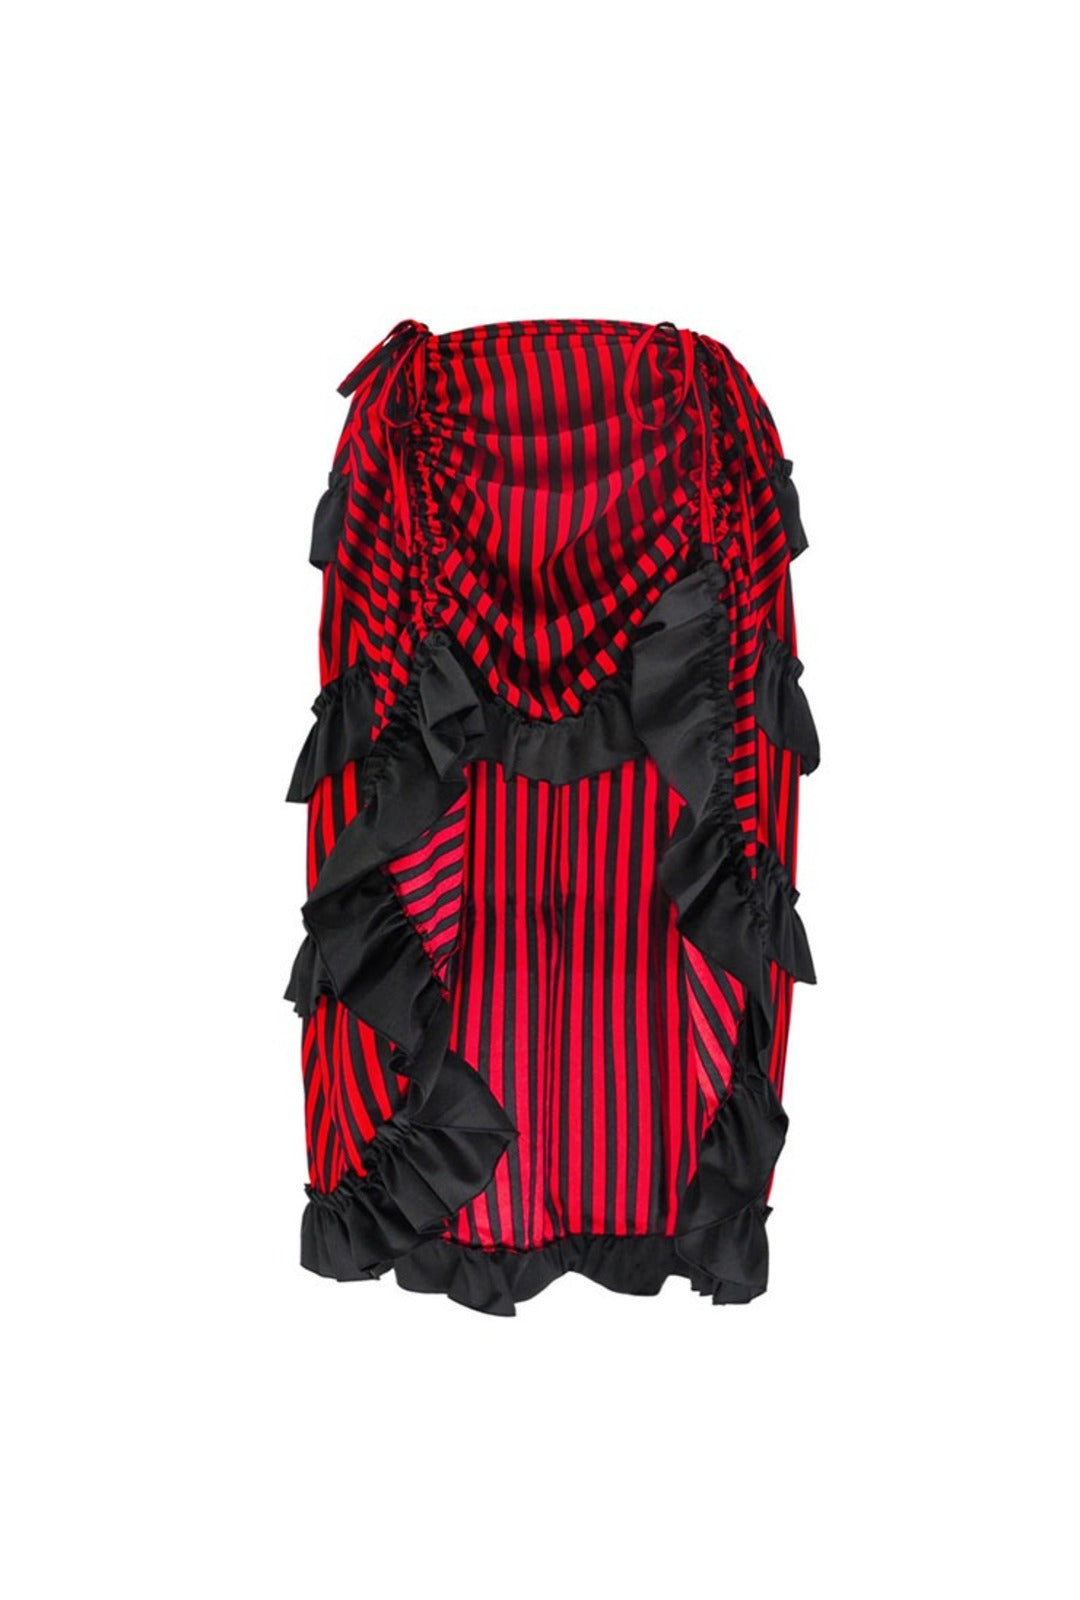 Red Stripe High-Low Steampunk Skirt